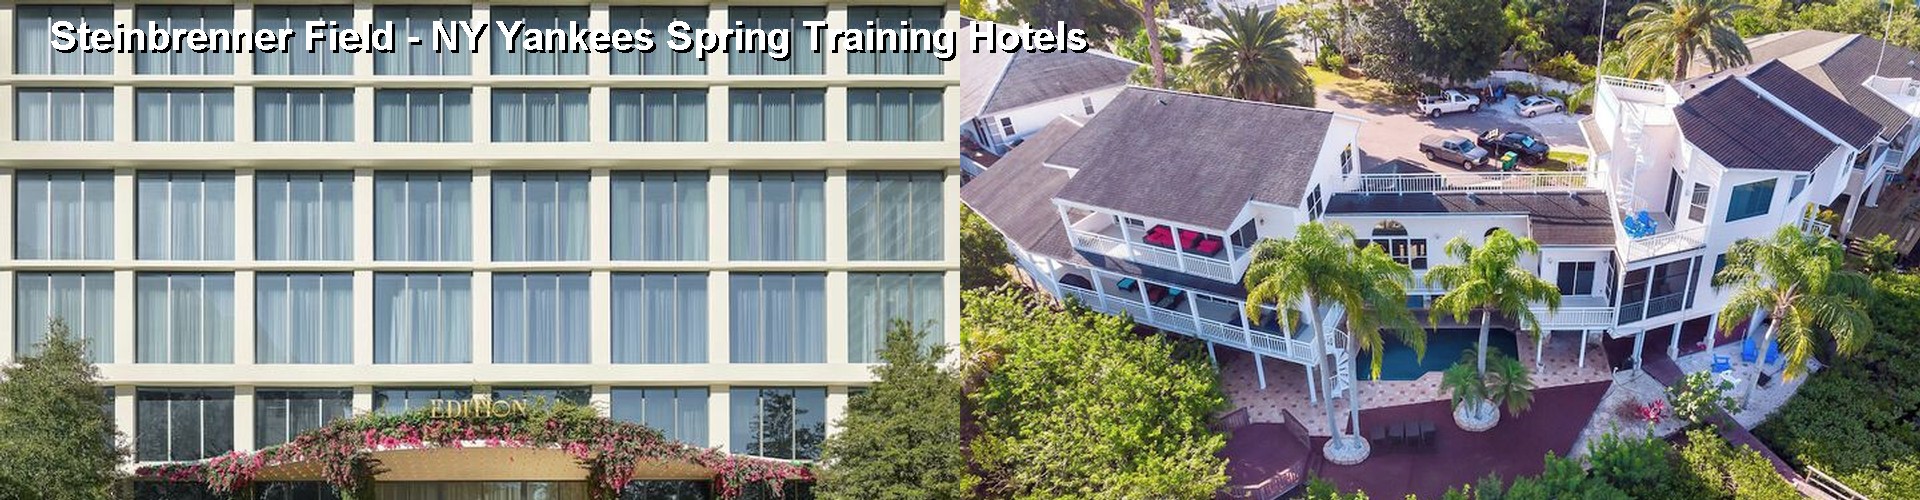 5 Best Hotels near Steinbrenner Field - NY Yankees Spring Training